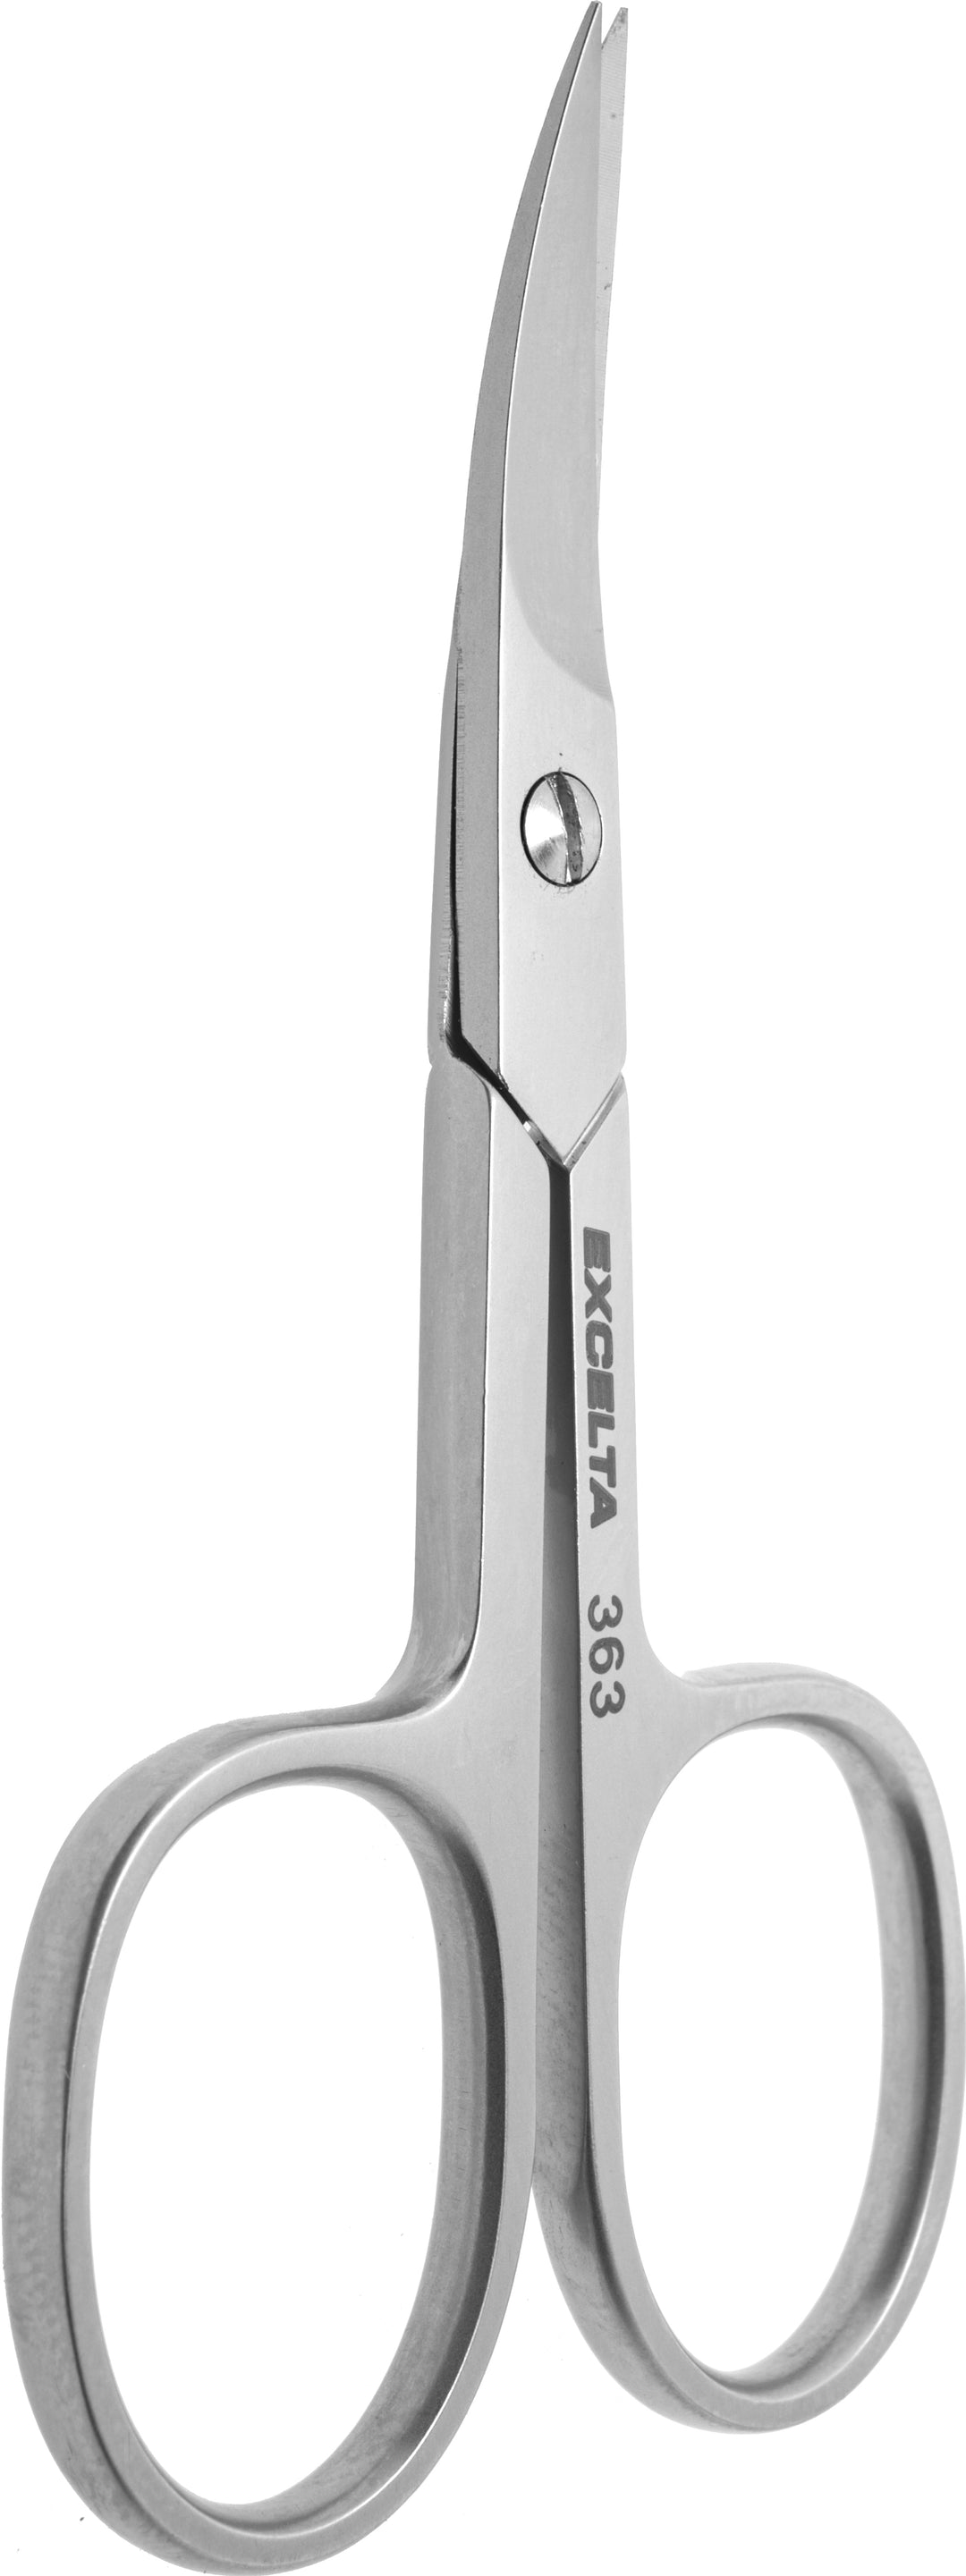 Excelta 363 Scissors - Medical Grade - 17° Curved 1.25" Blade - SS